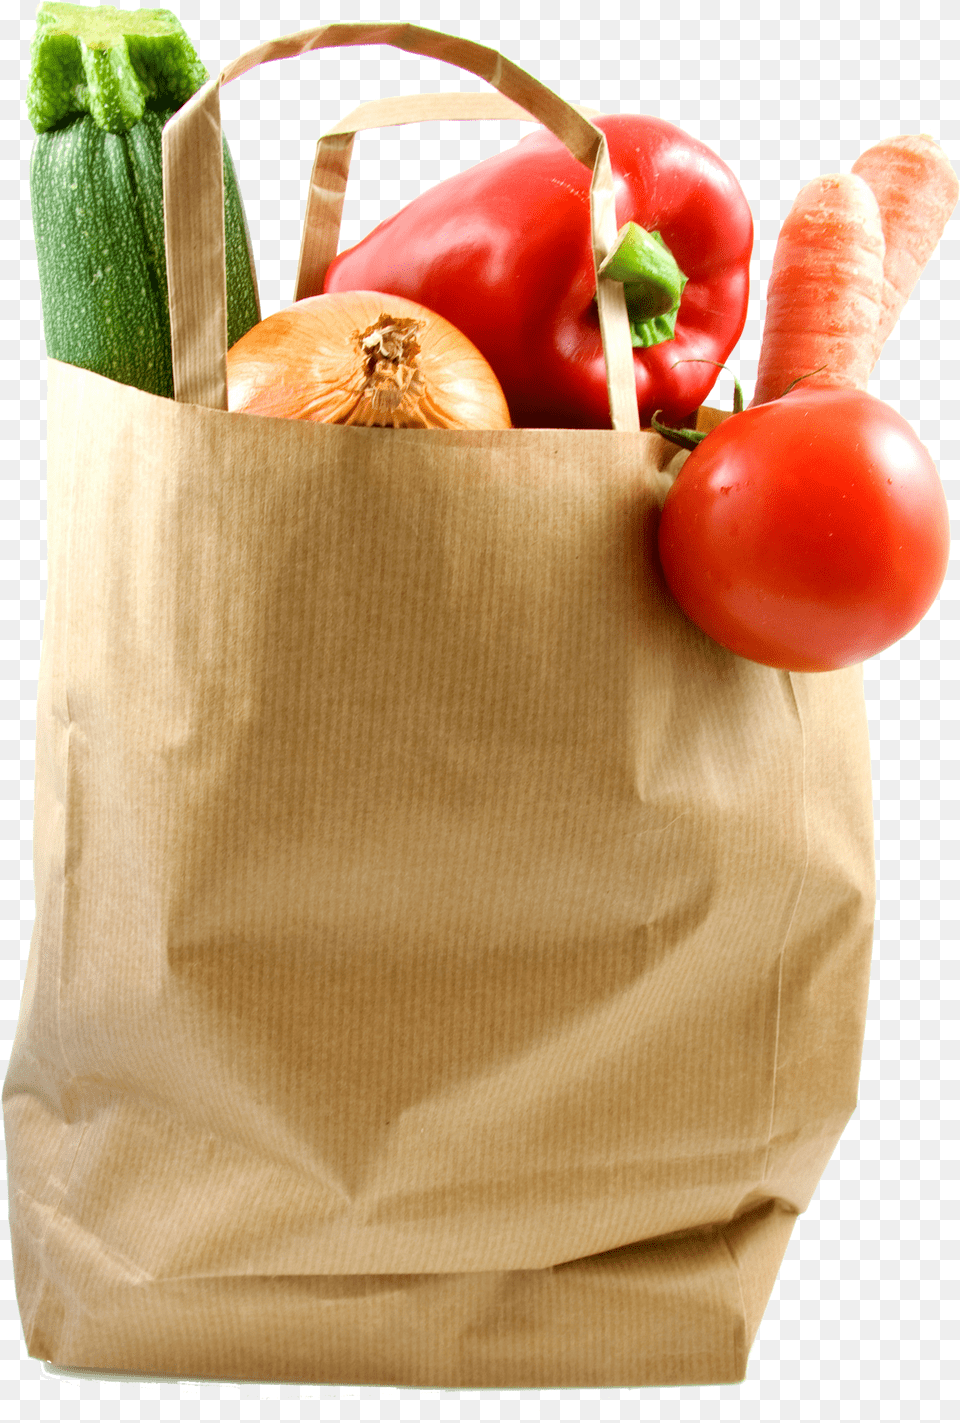 Food Bag Stock Photo Shopping Bag Food Paper, Accessories, Handbag, Produce, Plant Free Transparent Png